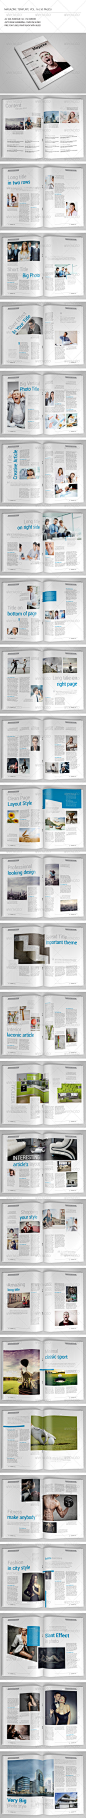 50 Pages Clean Magazine Vol16 - Magazines Print Templates